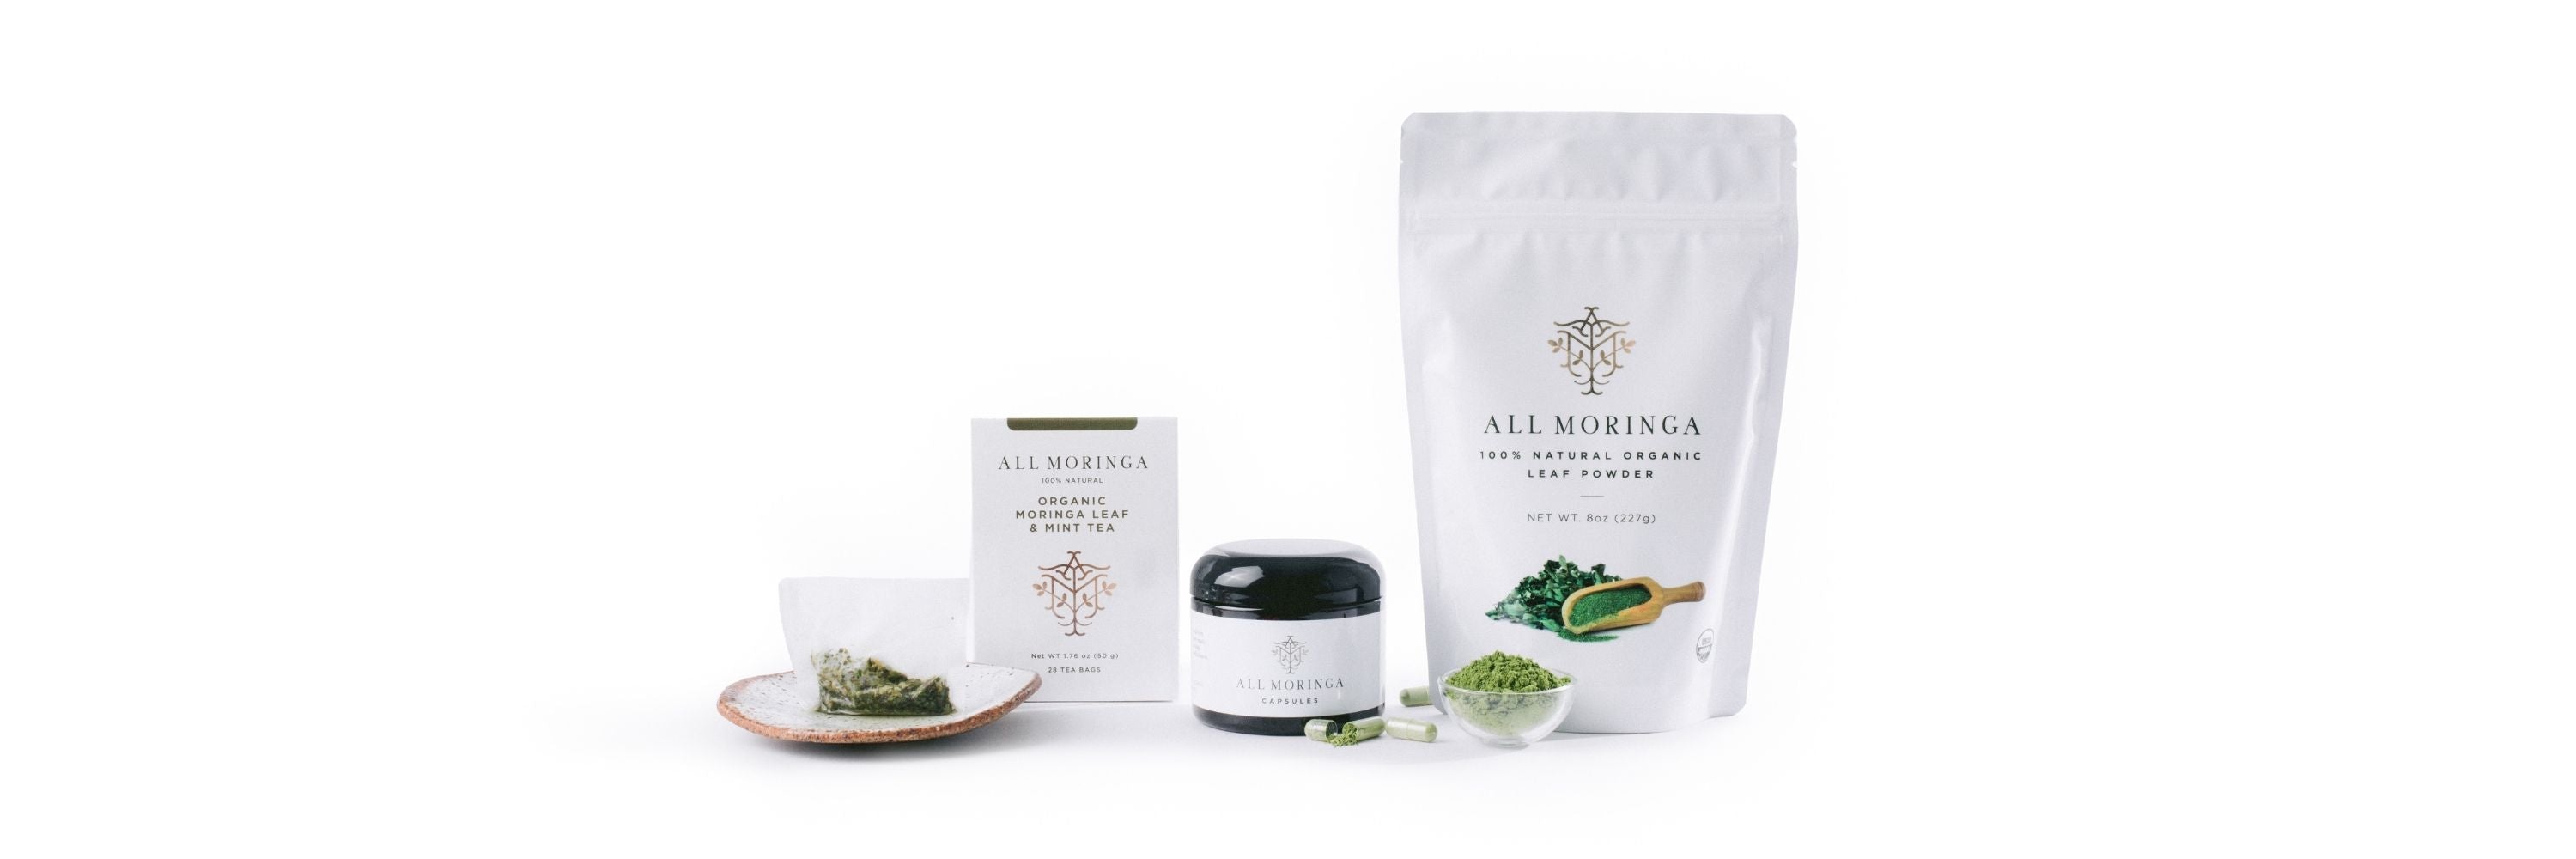 moringa leaf powder uses in all moringa products made with organic moringa leaves collection image banner